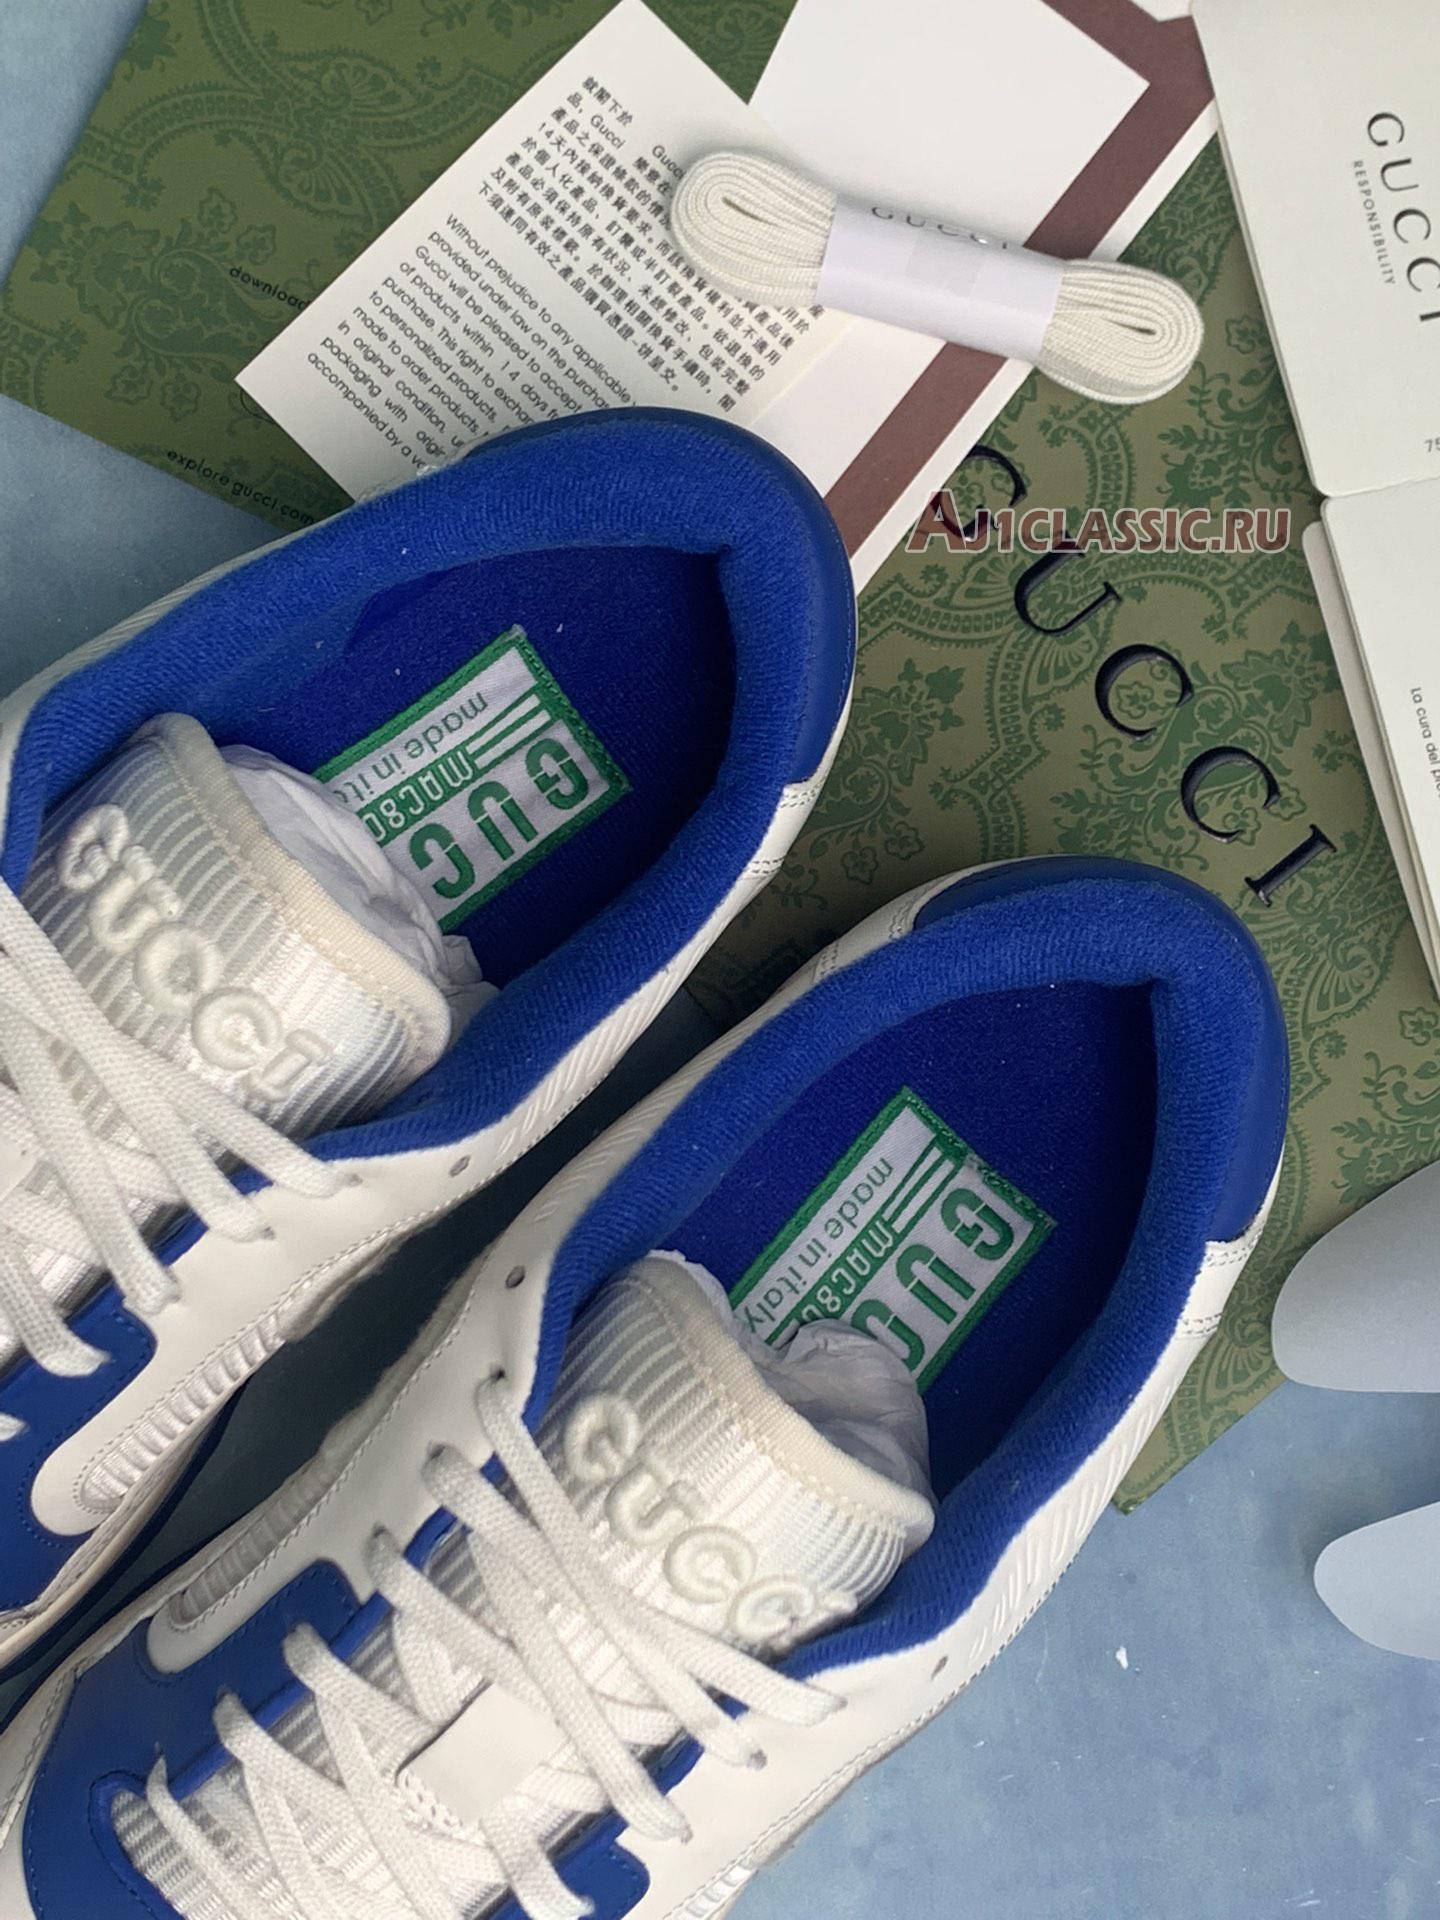 Gucci MAC80 Sneaker "Off White Blue" 749896 AAB79 9149